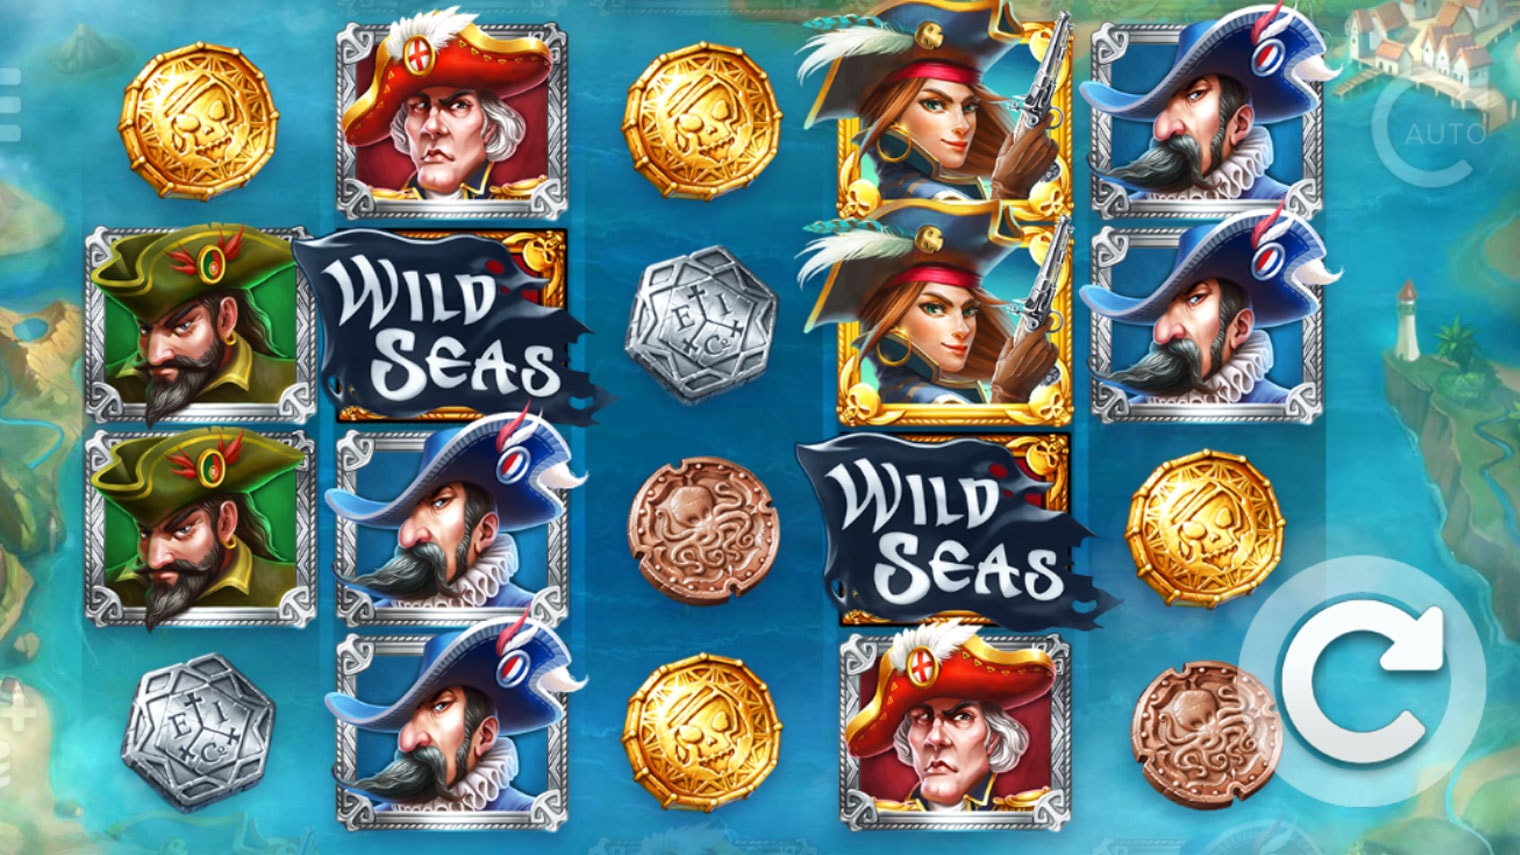 wild seas slot screenshot